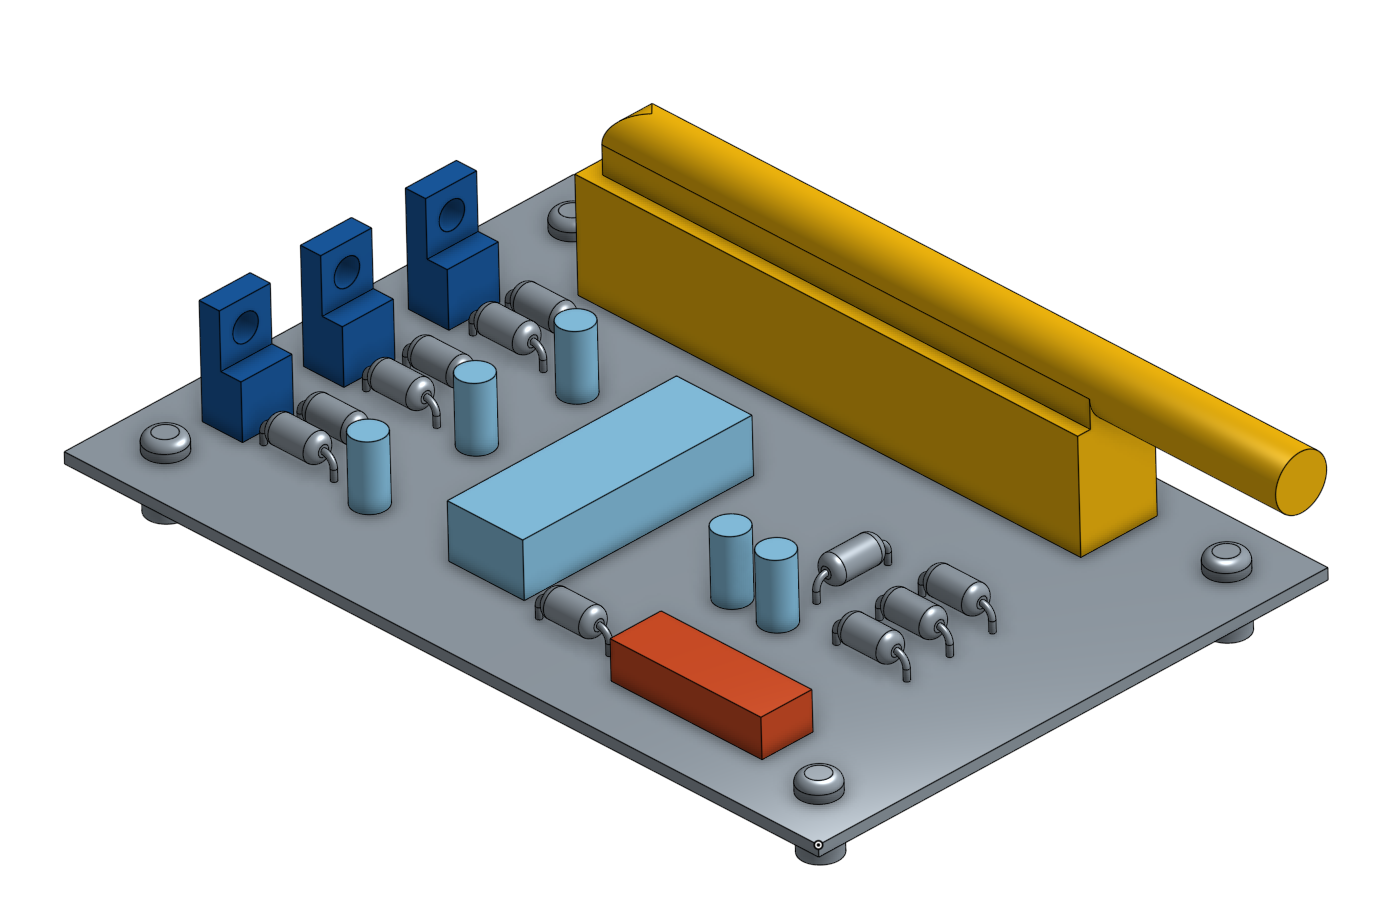 PCB design model using Onshape